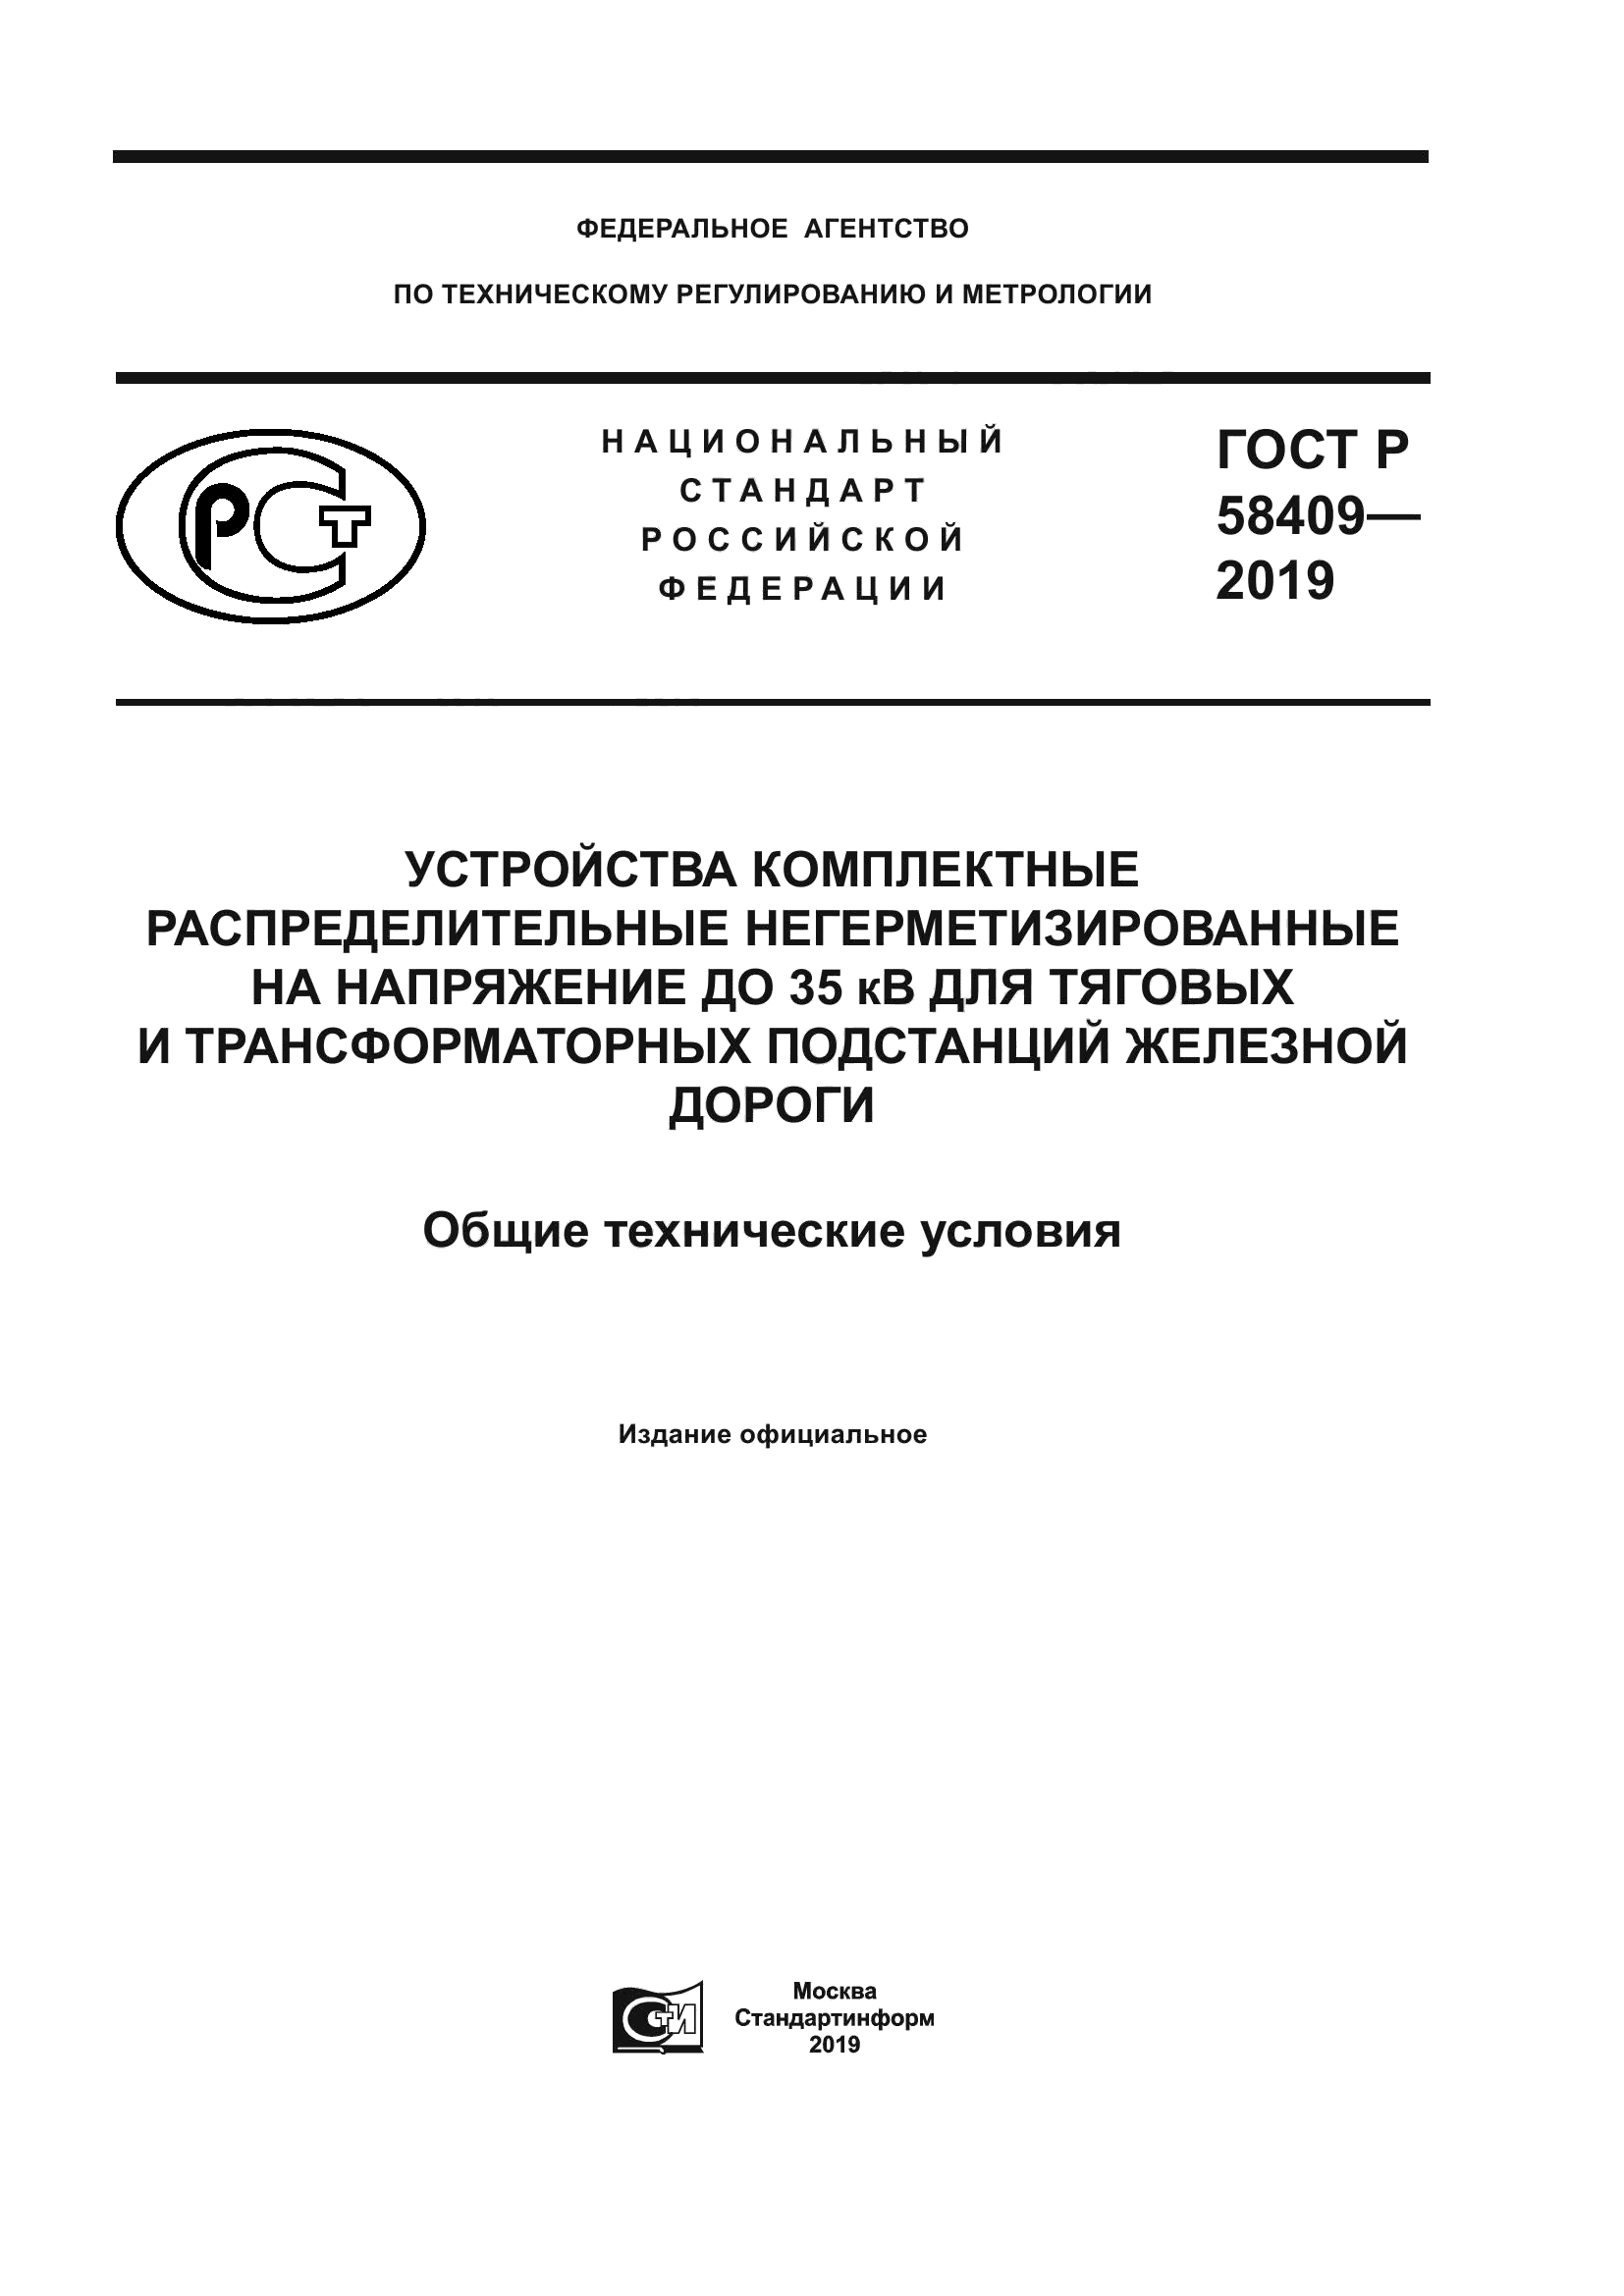 ГОСТ Р 58409-2019